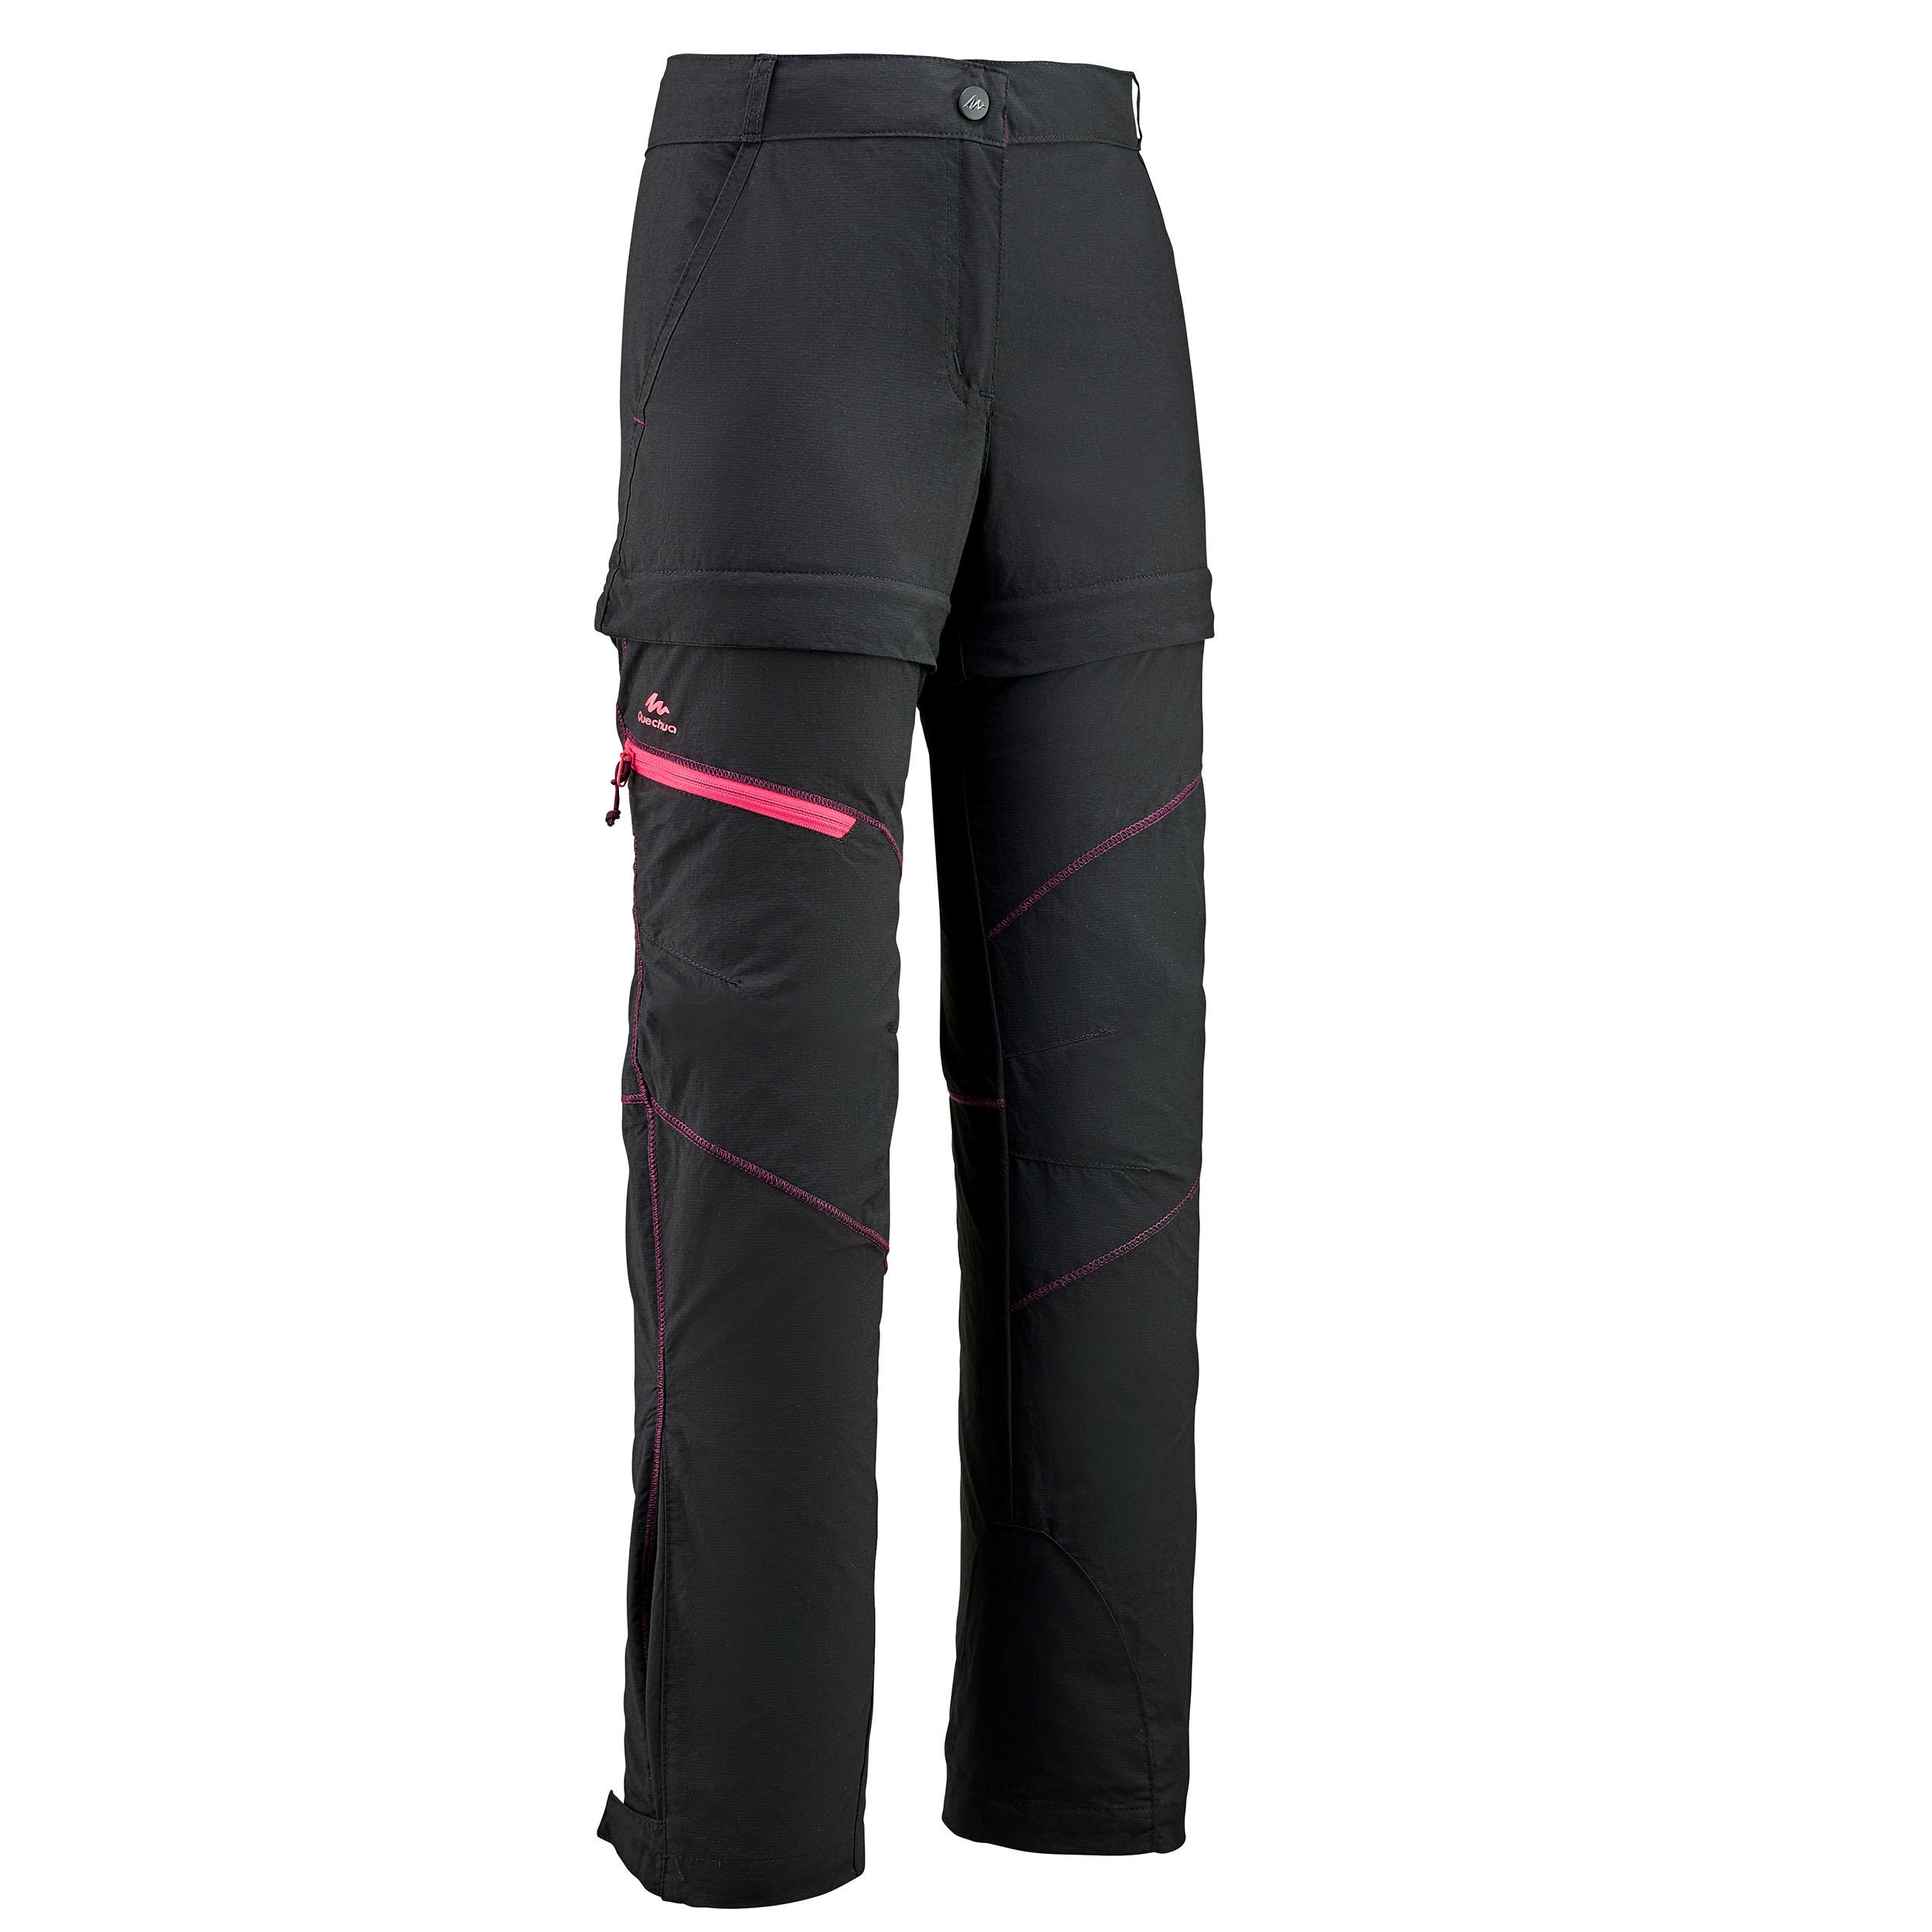 Reebok Femmes Matelassée Wanderhose thermique Trekking Pantalon Pantalon de ski chaud noir 